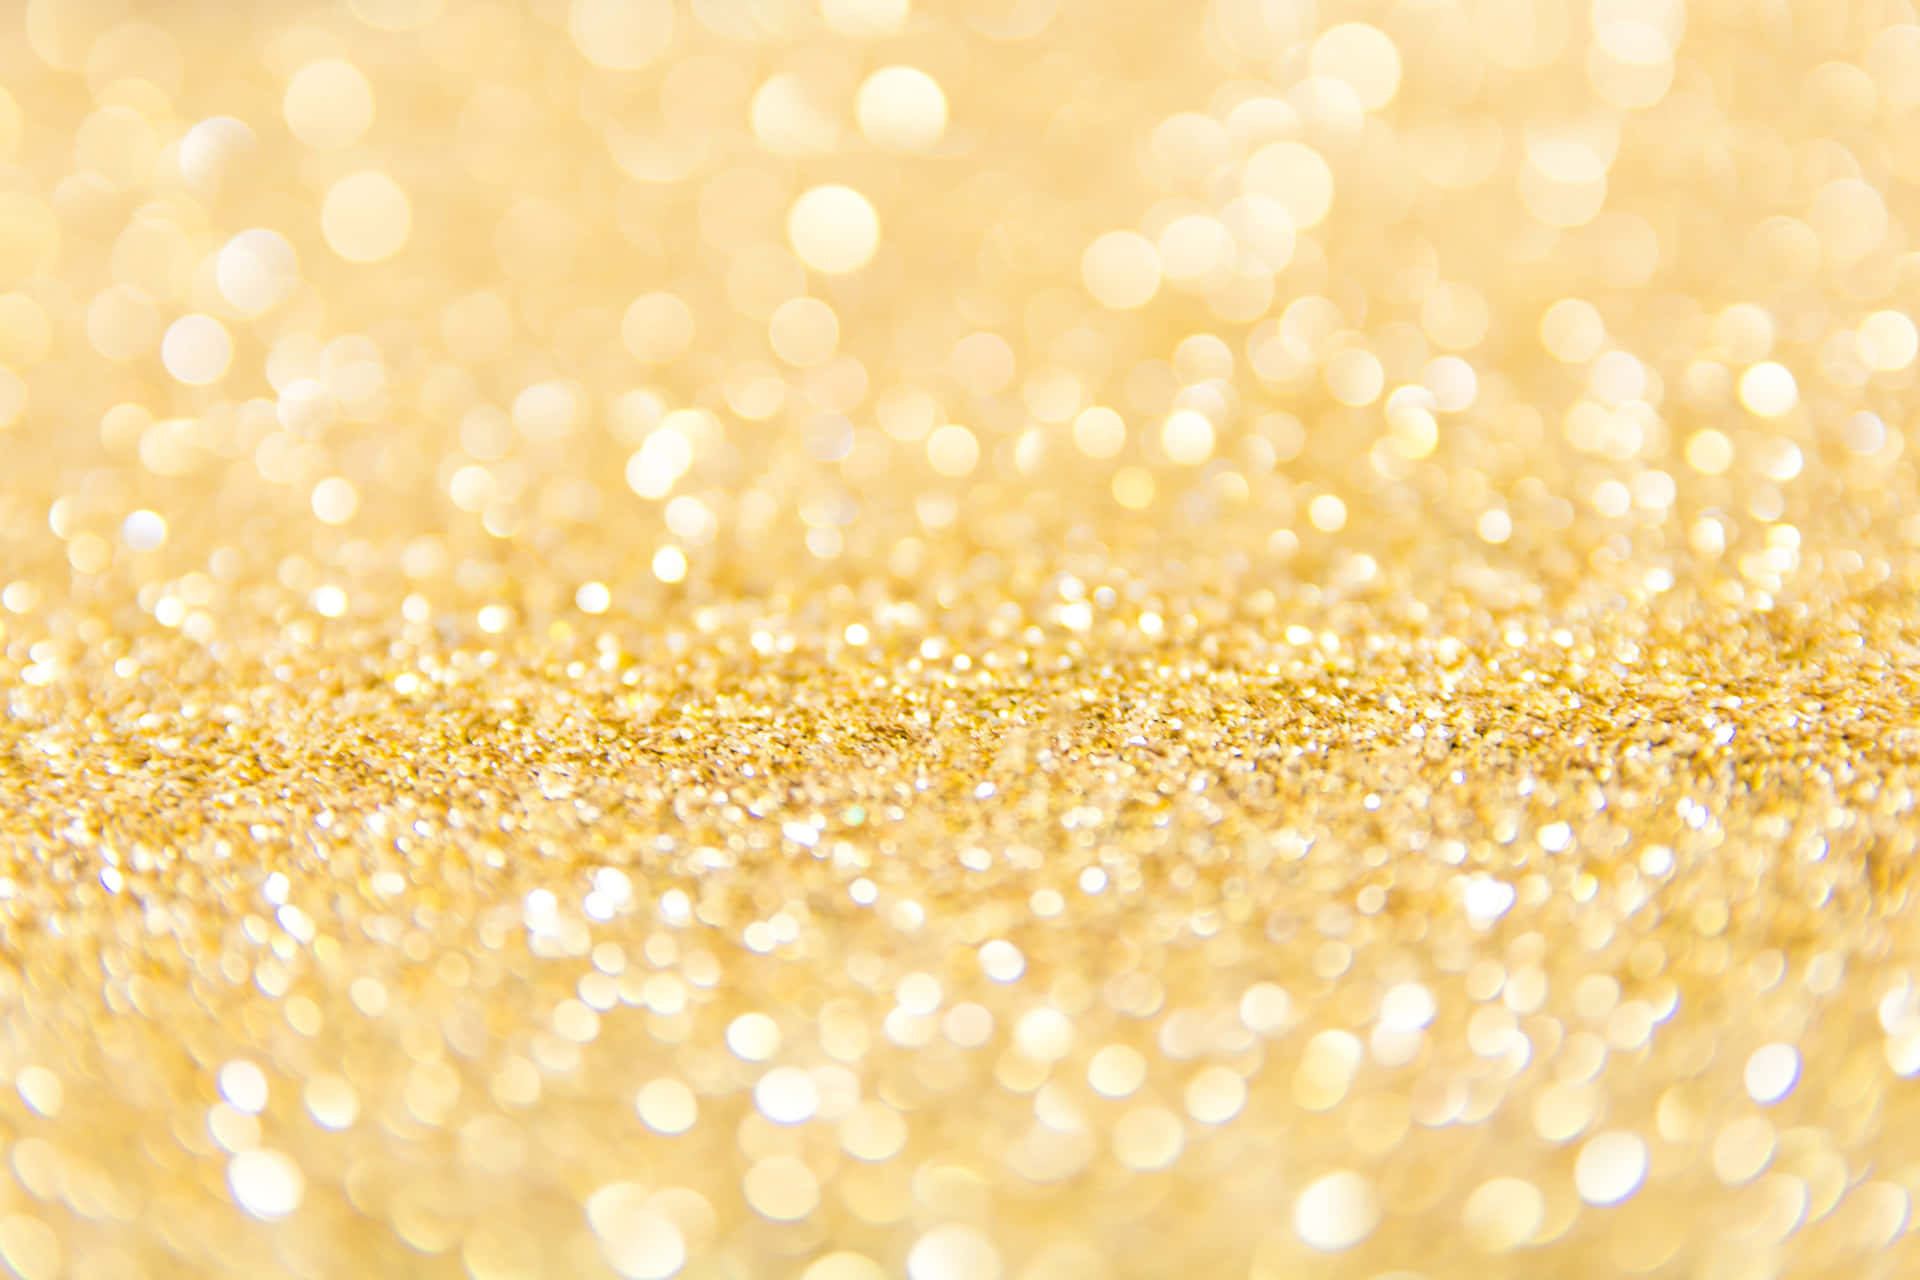 100+] High Resolution Gold Glitter Backgrounds